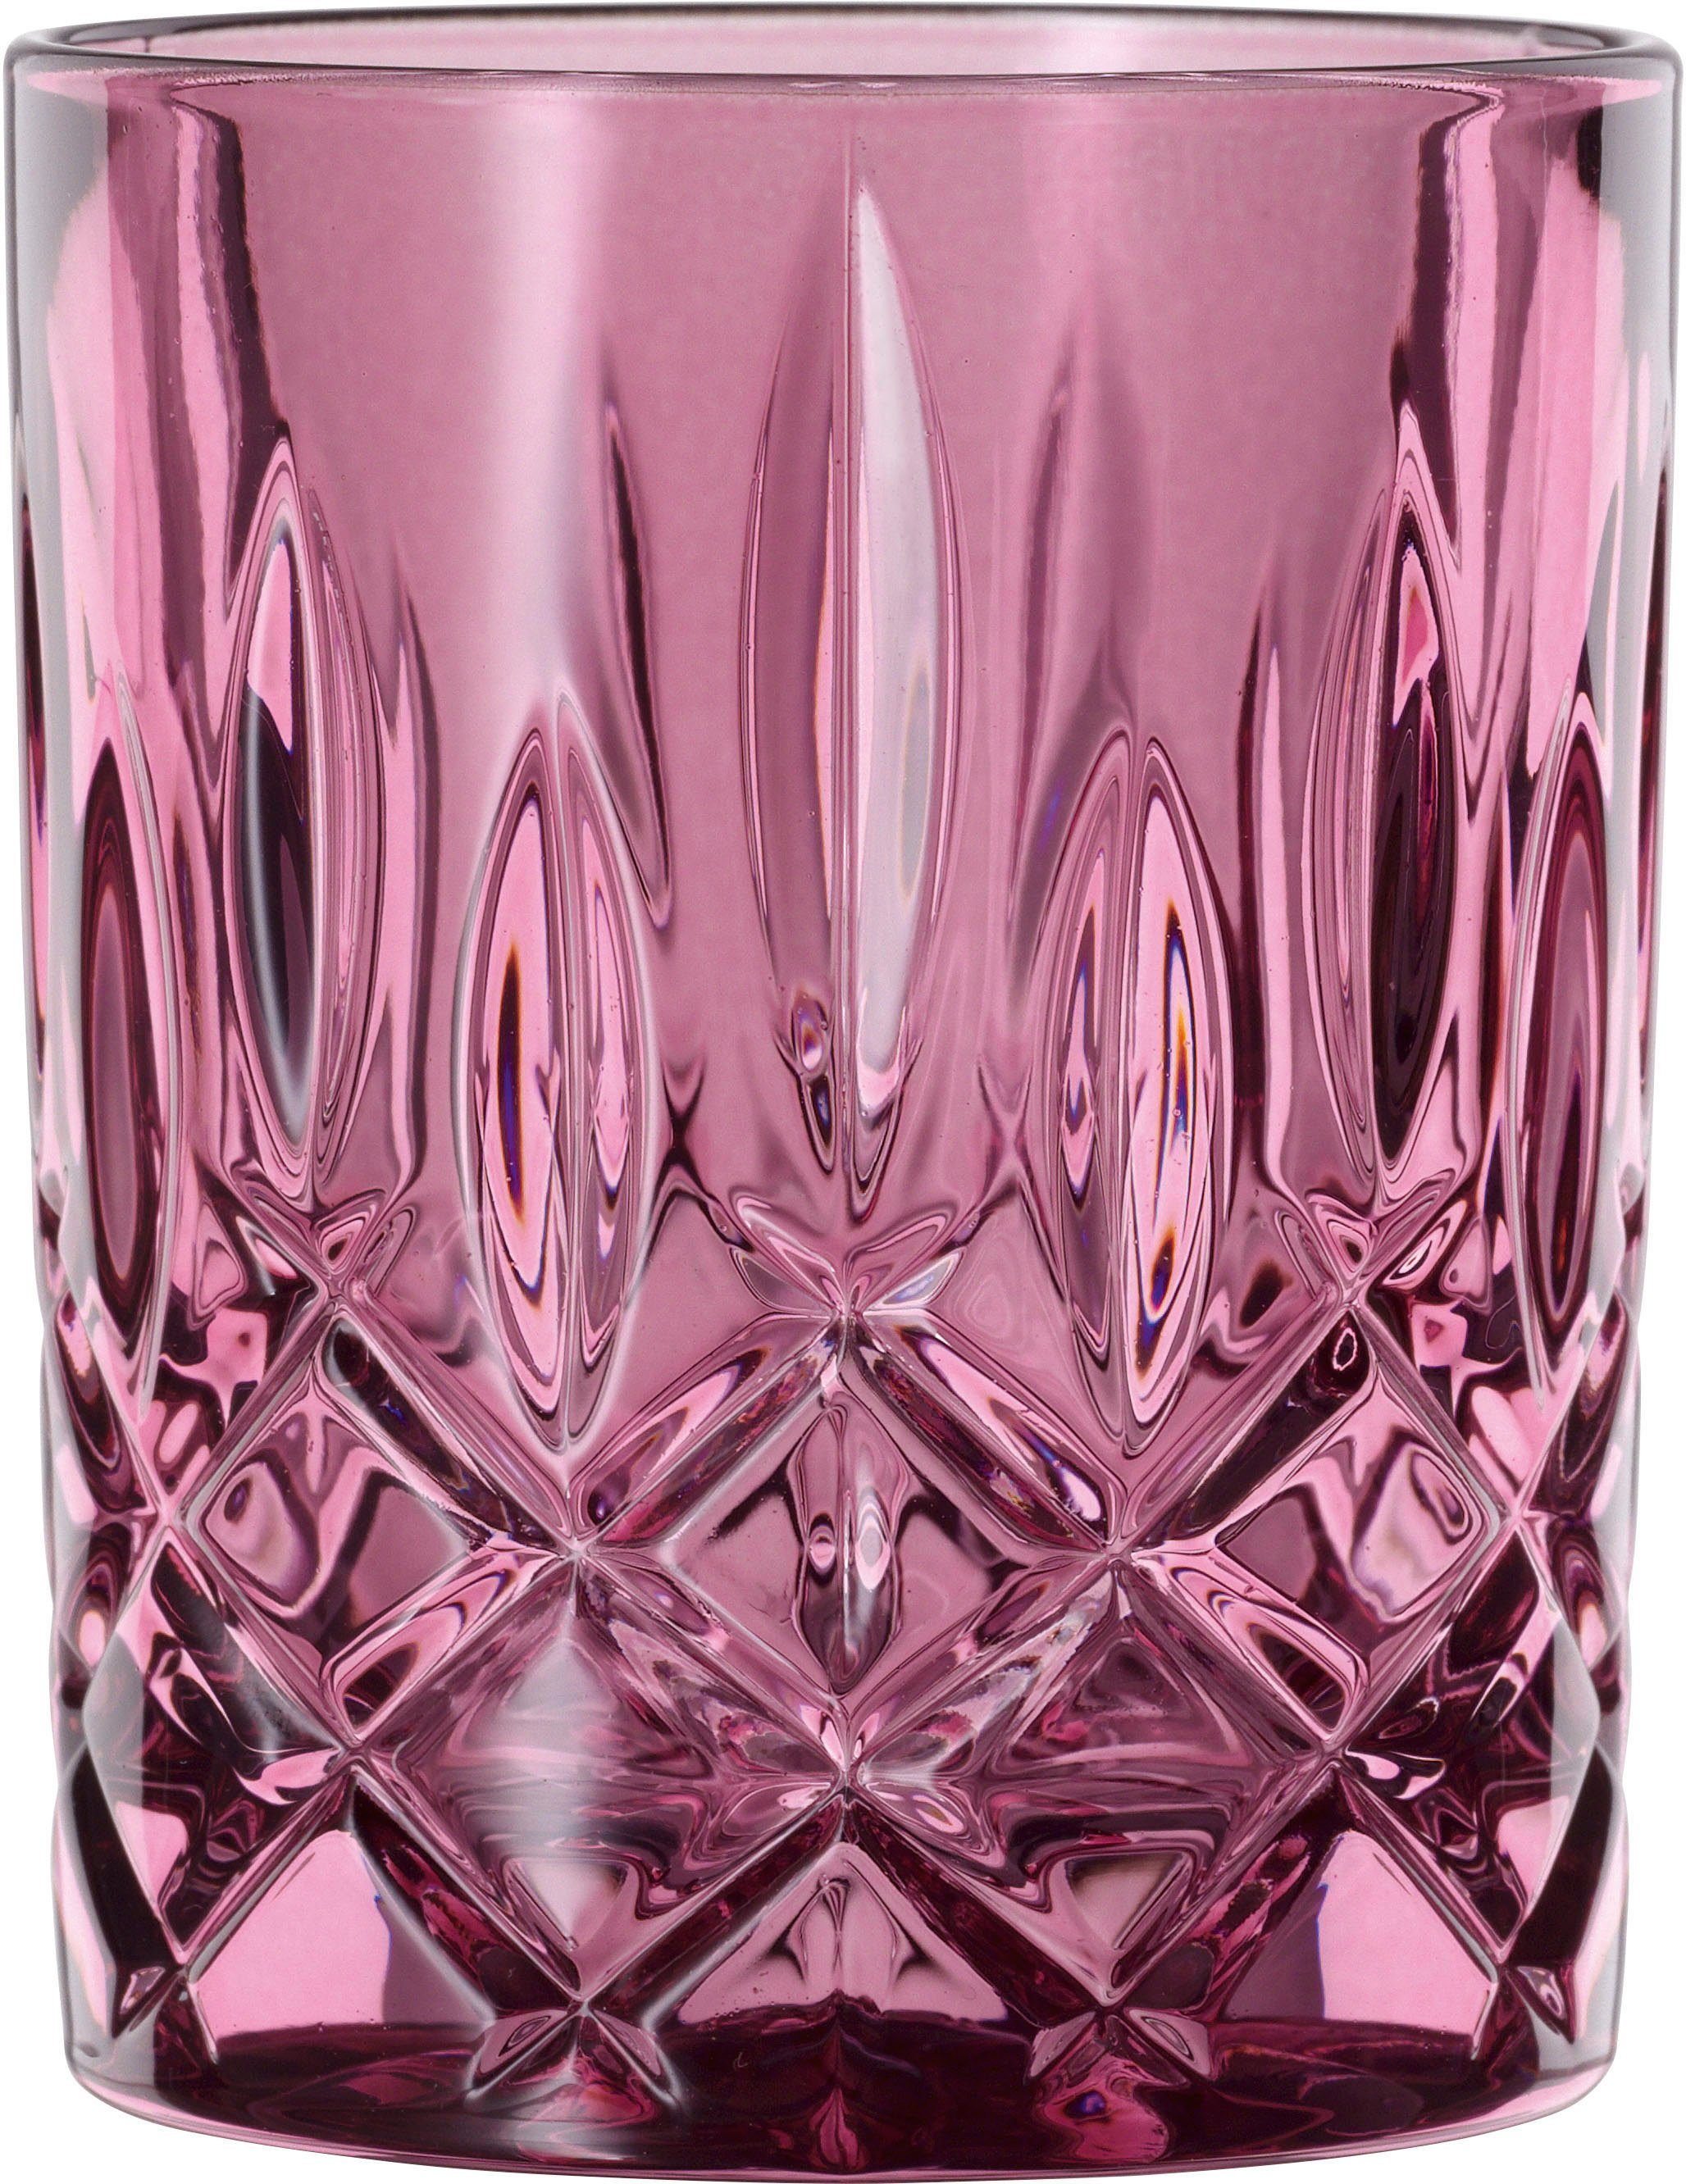 Nachtmann Whiskyglas Noblesse, Kristallglas, Made in Germany, 295 ml, 2-teilig berry